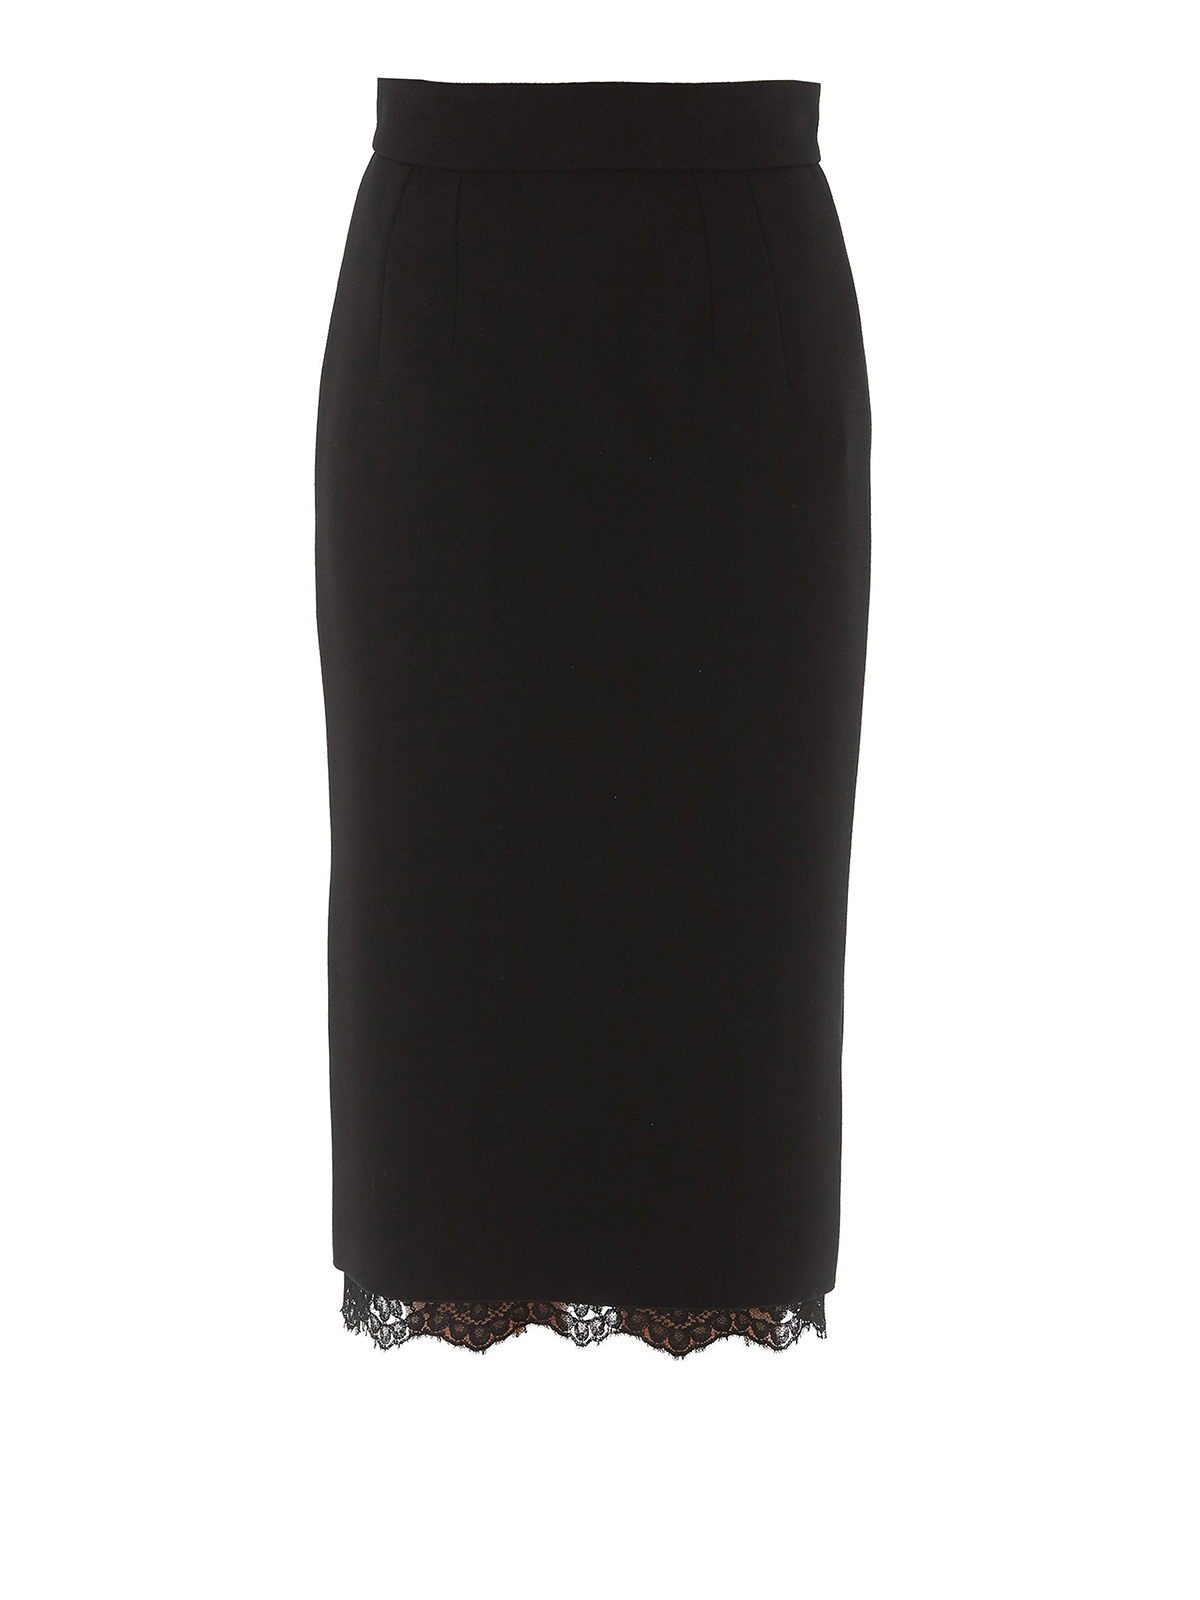 Dolce & Gabbana Lace Trimmed Black Pencil Skirt